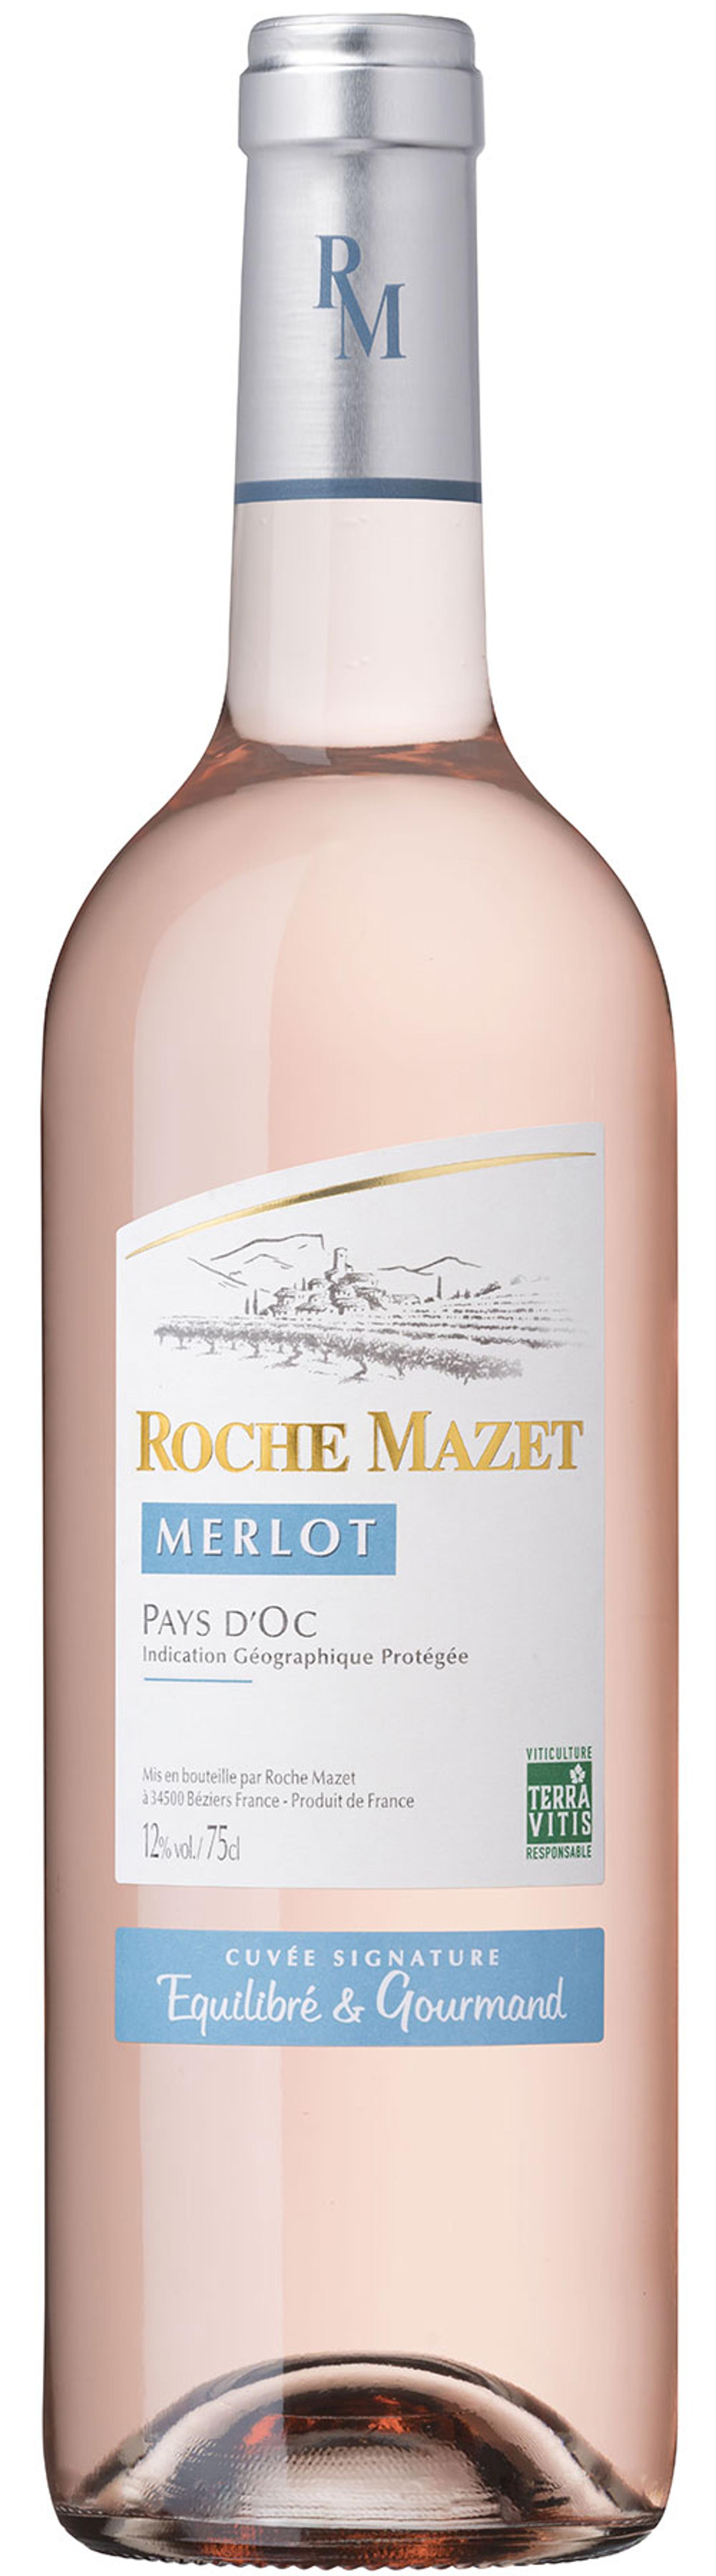 Roche Mazet Merlot rosé